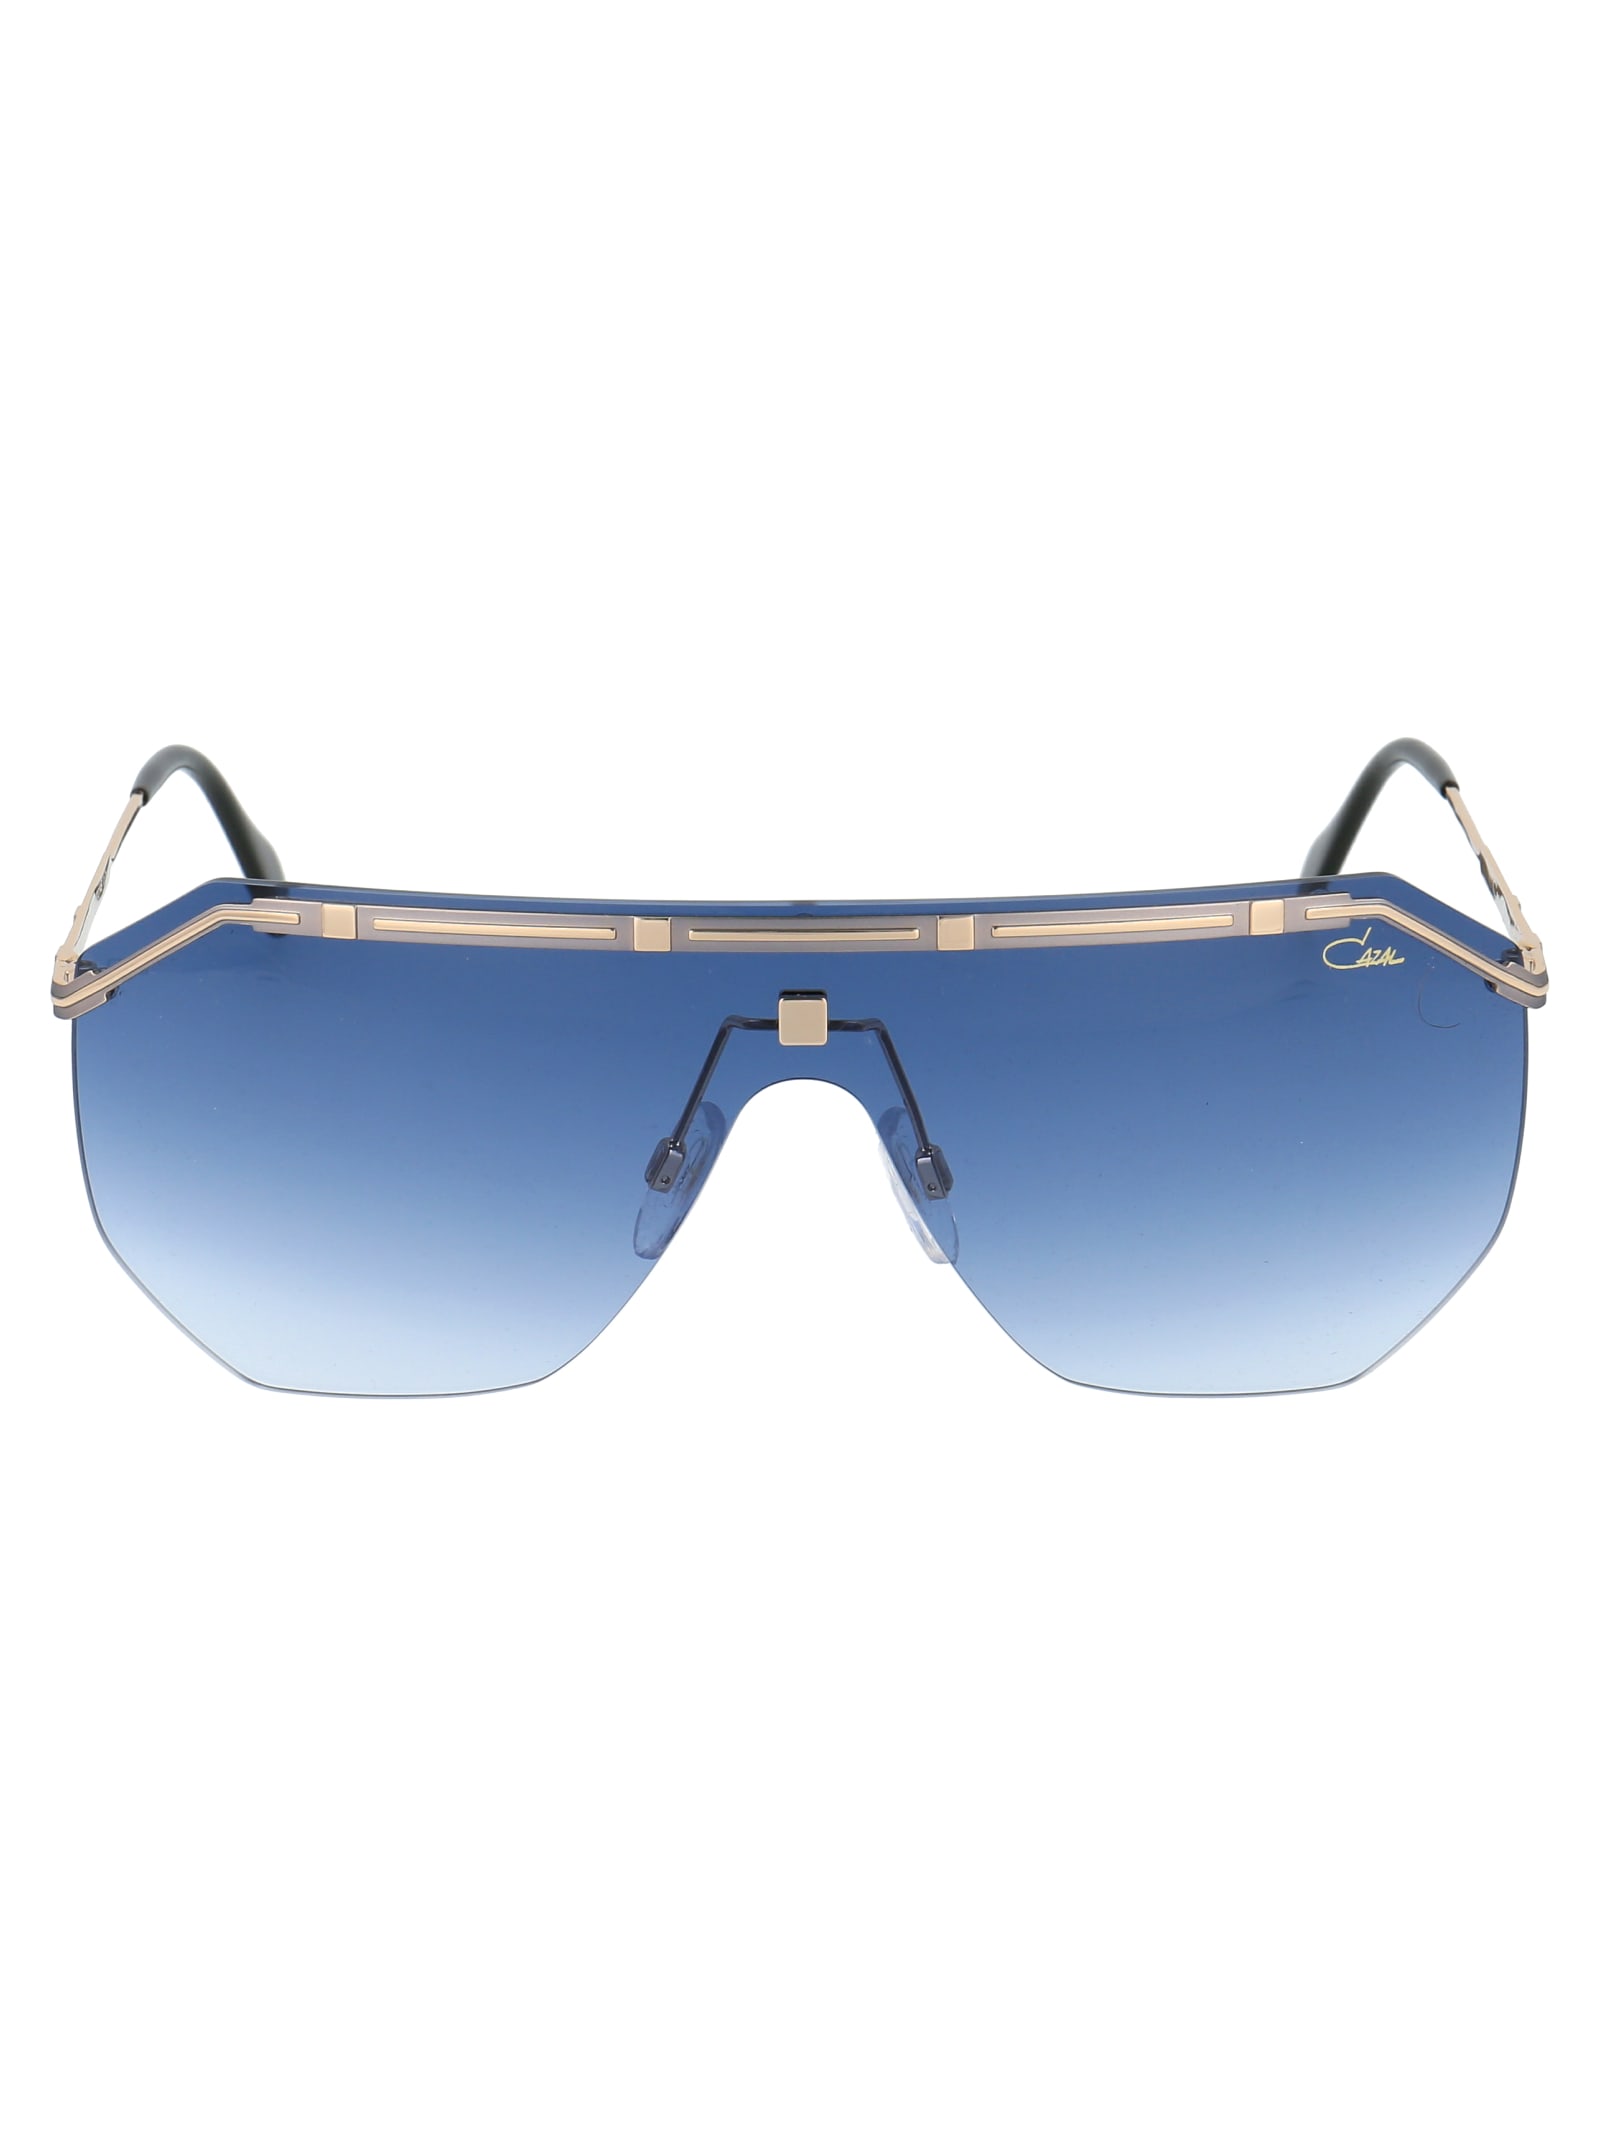 Cazal Mod. 9089 Sunglasses